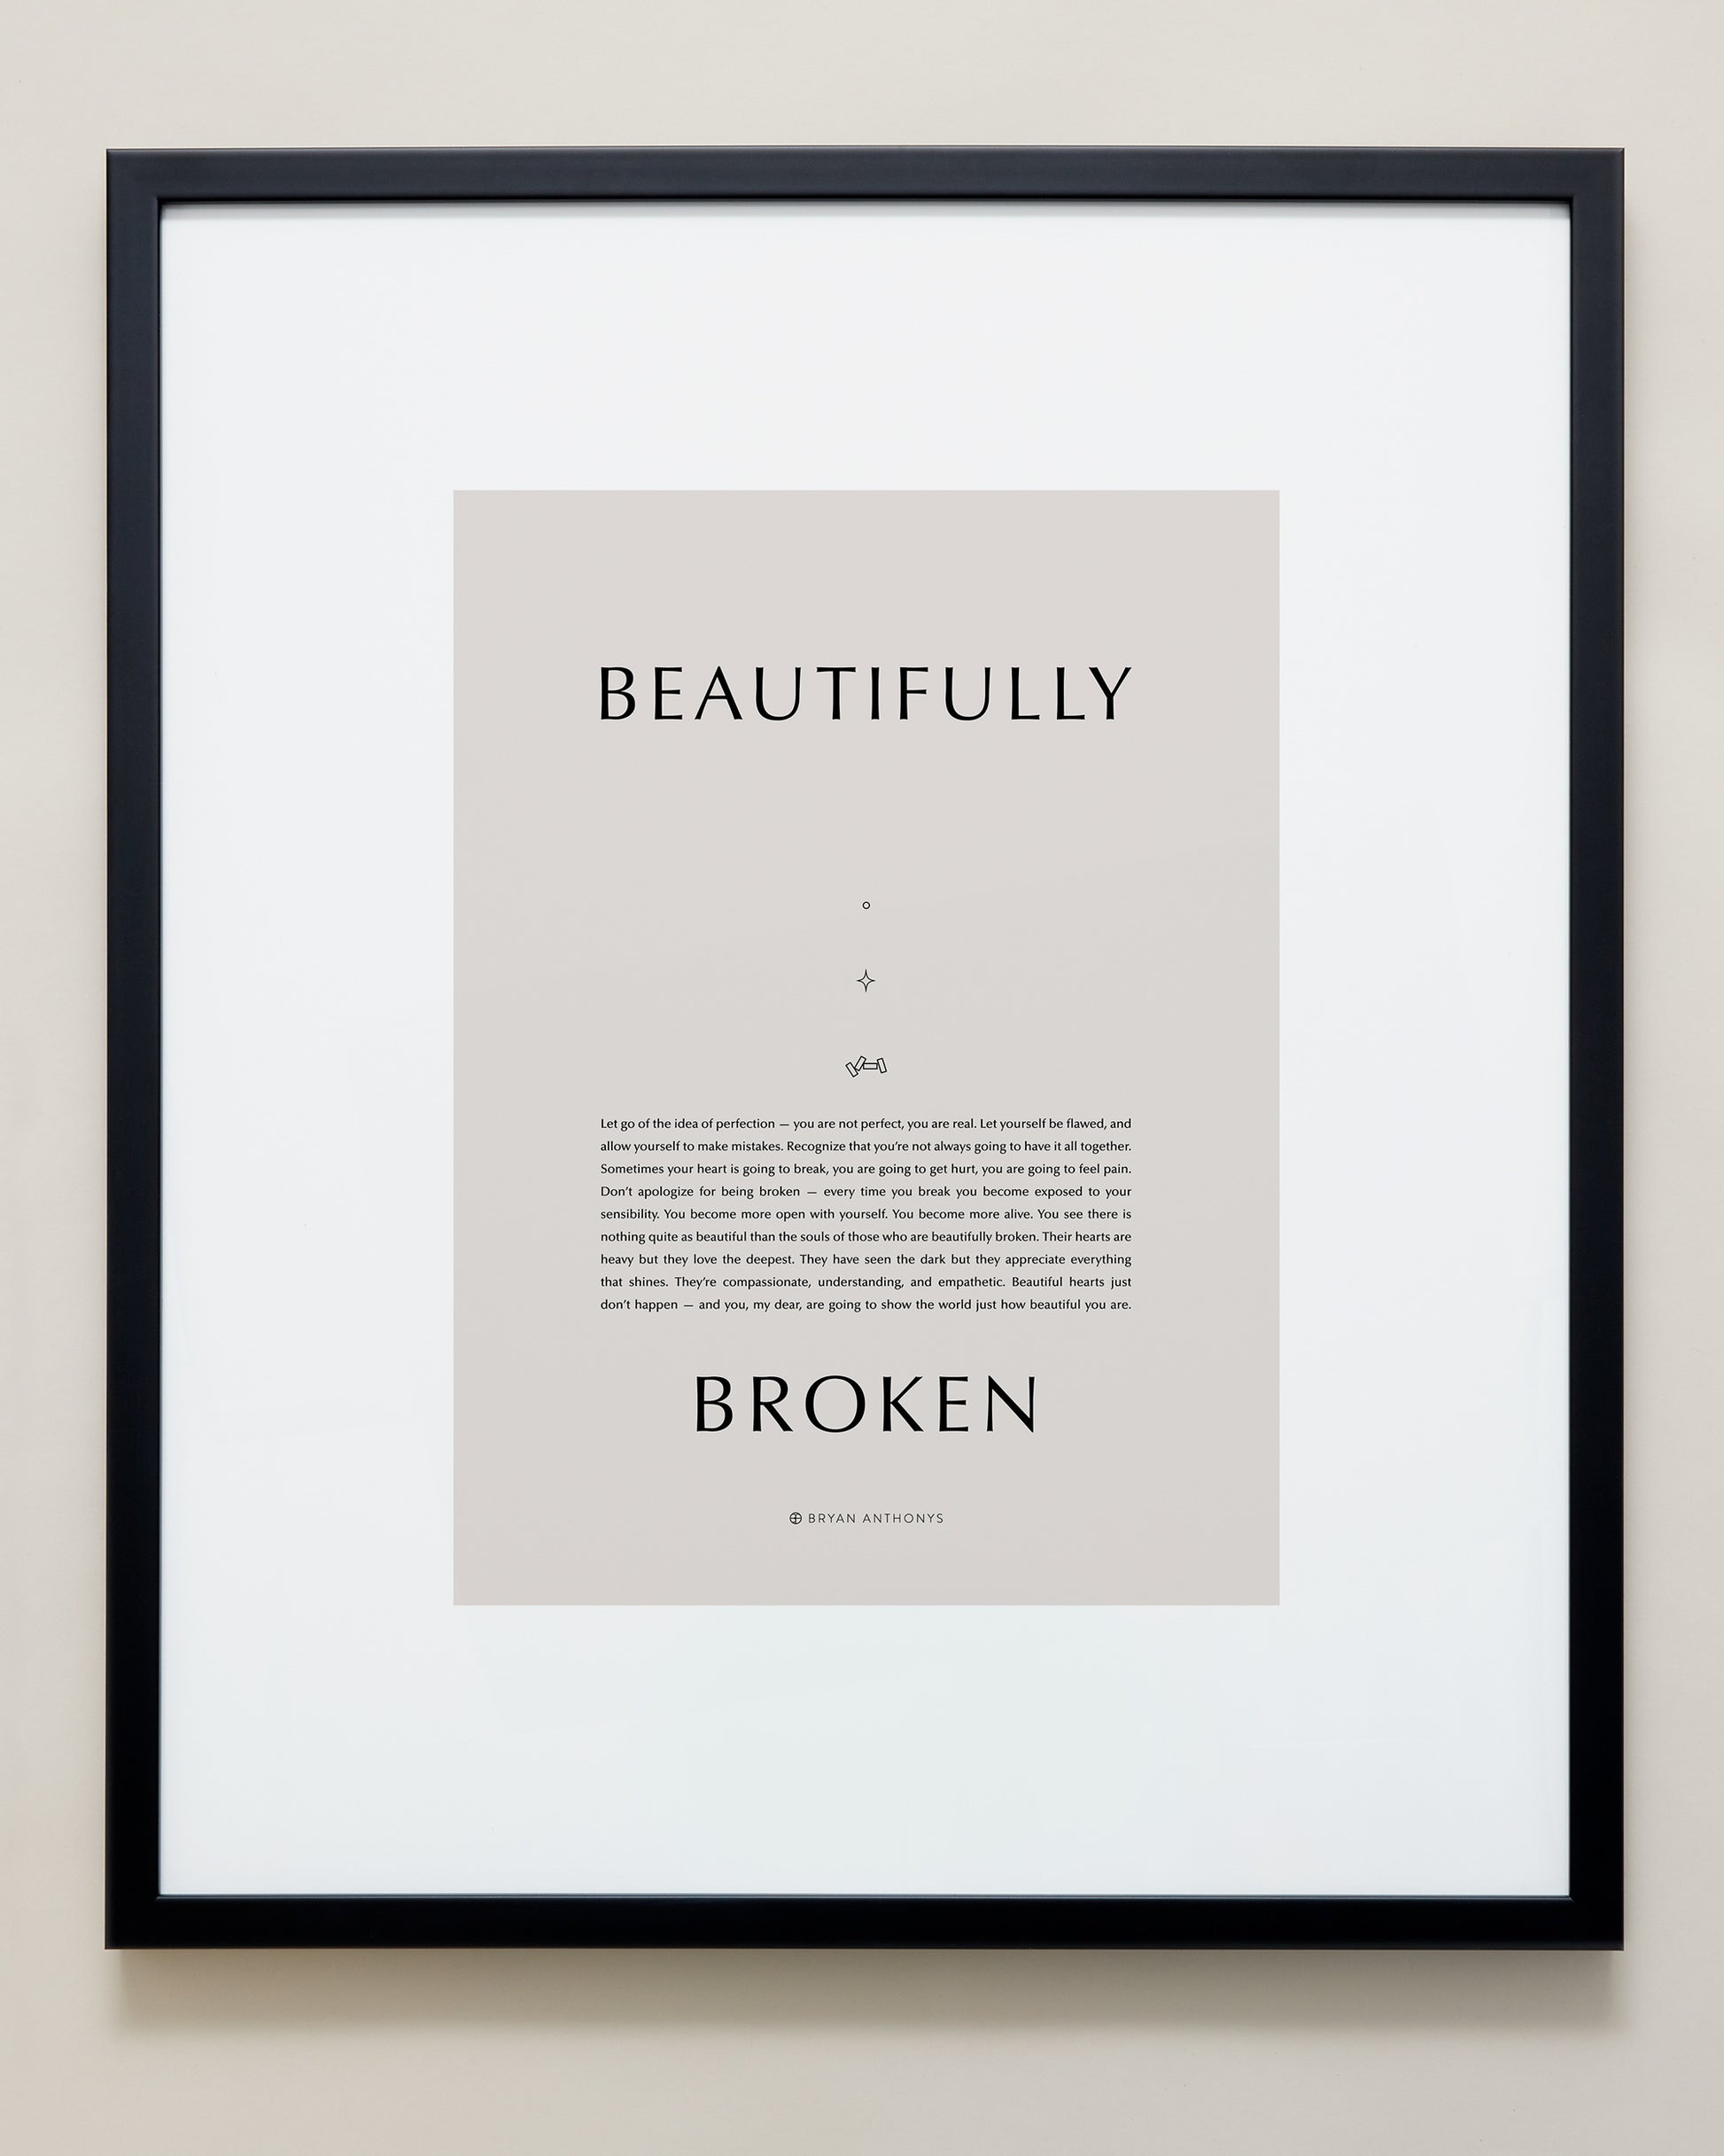 Bryan Anthonys Home Decor Purposeful Prints Beautifully Broken Iconic Framed Print Black Frame Tan Art 20x24